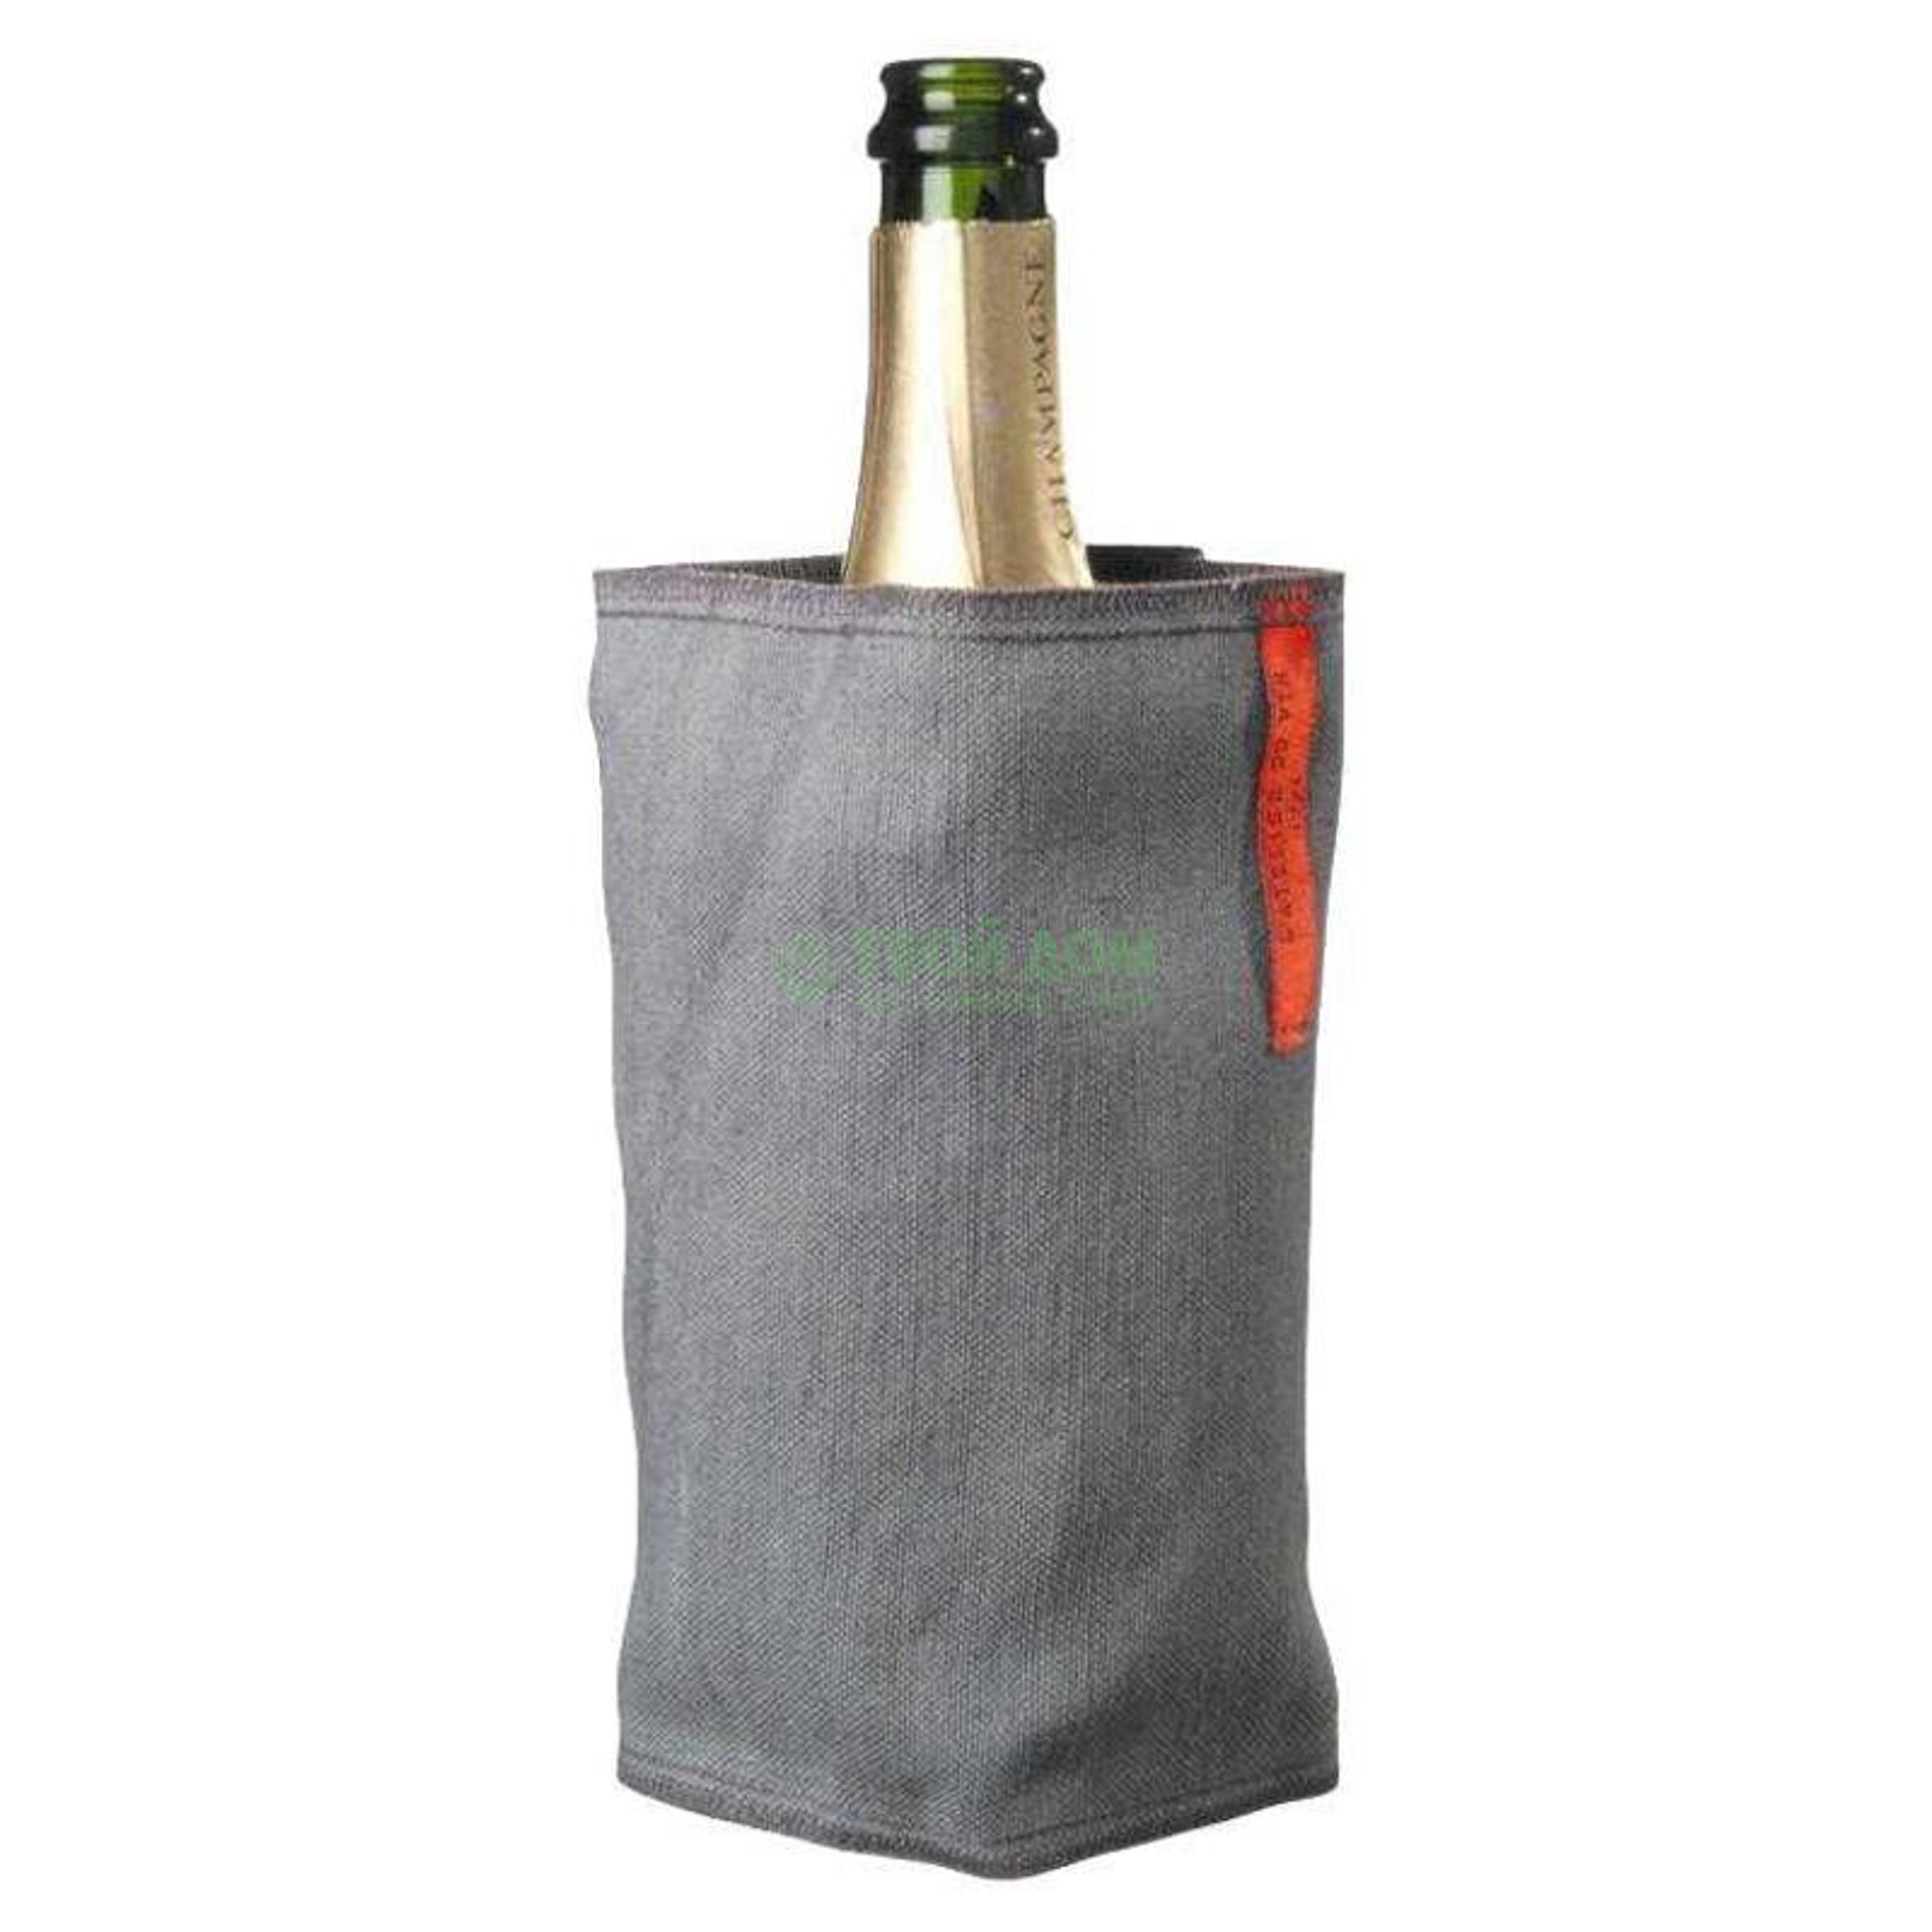 Чехол охлаждающий для бутылок Latelier du vin фрешгрейлинен, цвет серый - фото 1